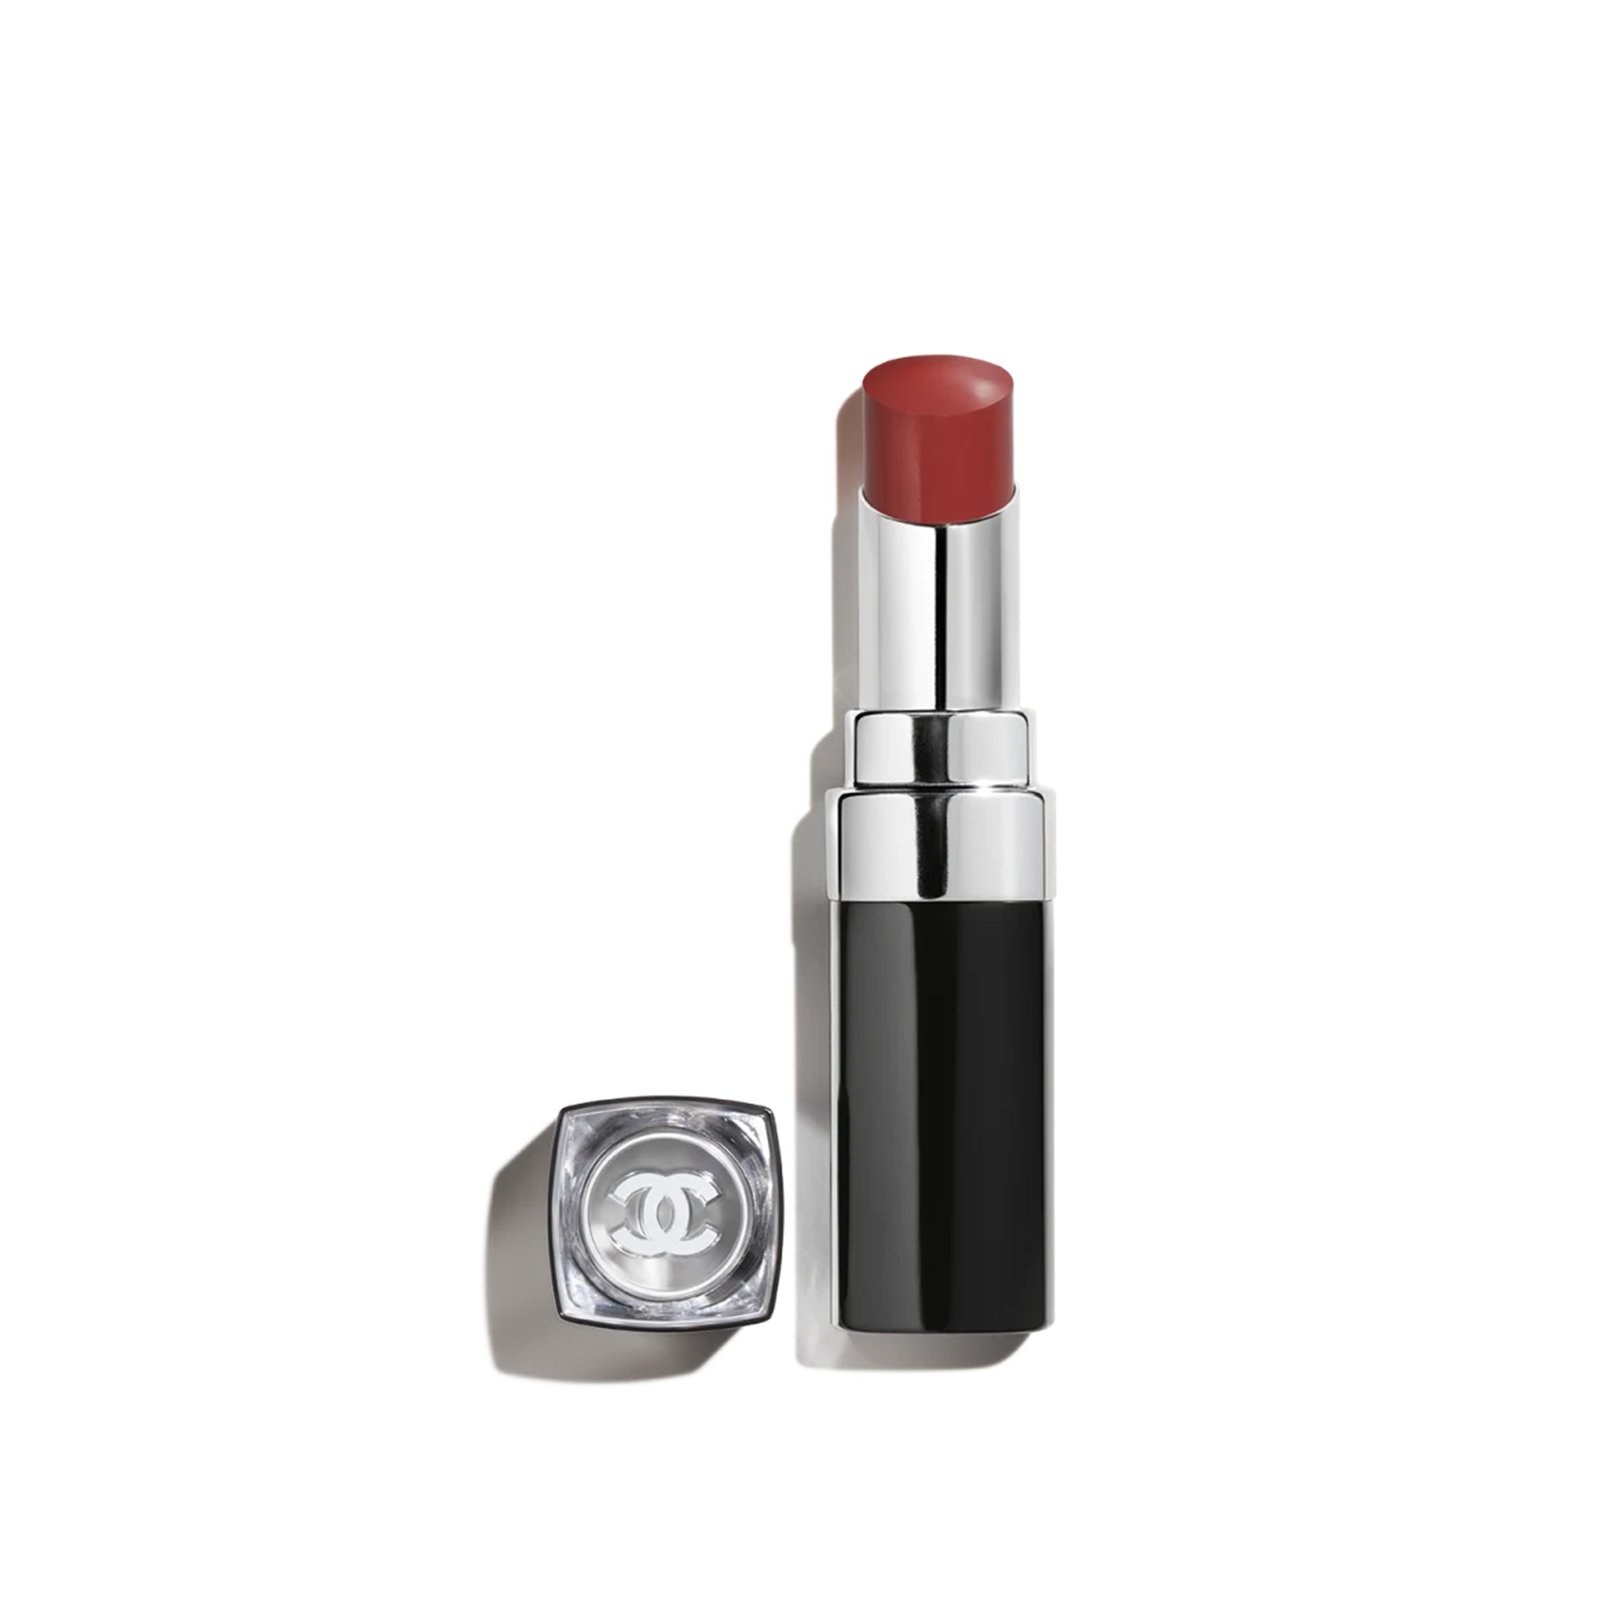 CHANEL Rouge Coco Bloom Intense Shine Lip Colour 134 Sunlight 3g (0.1 oz)